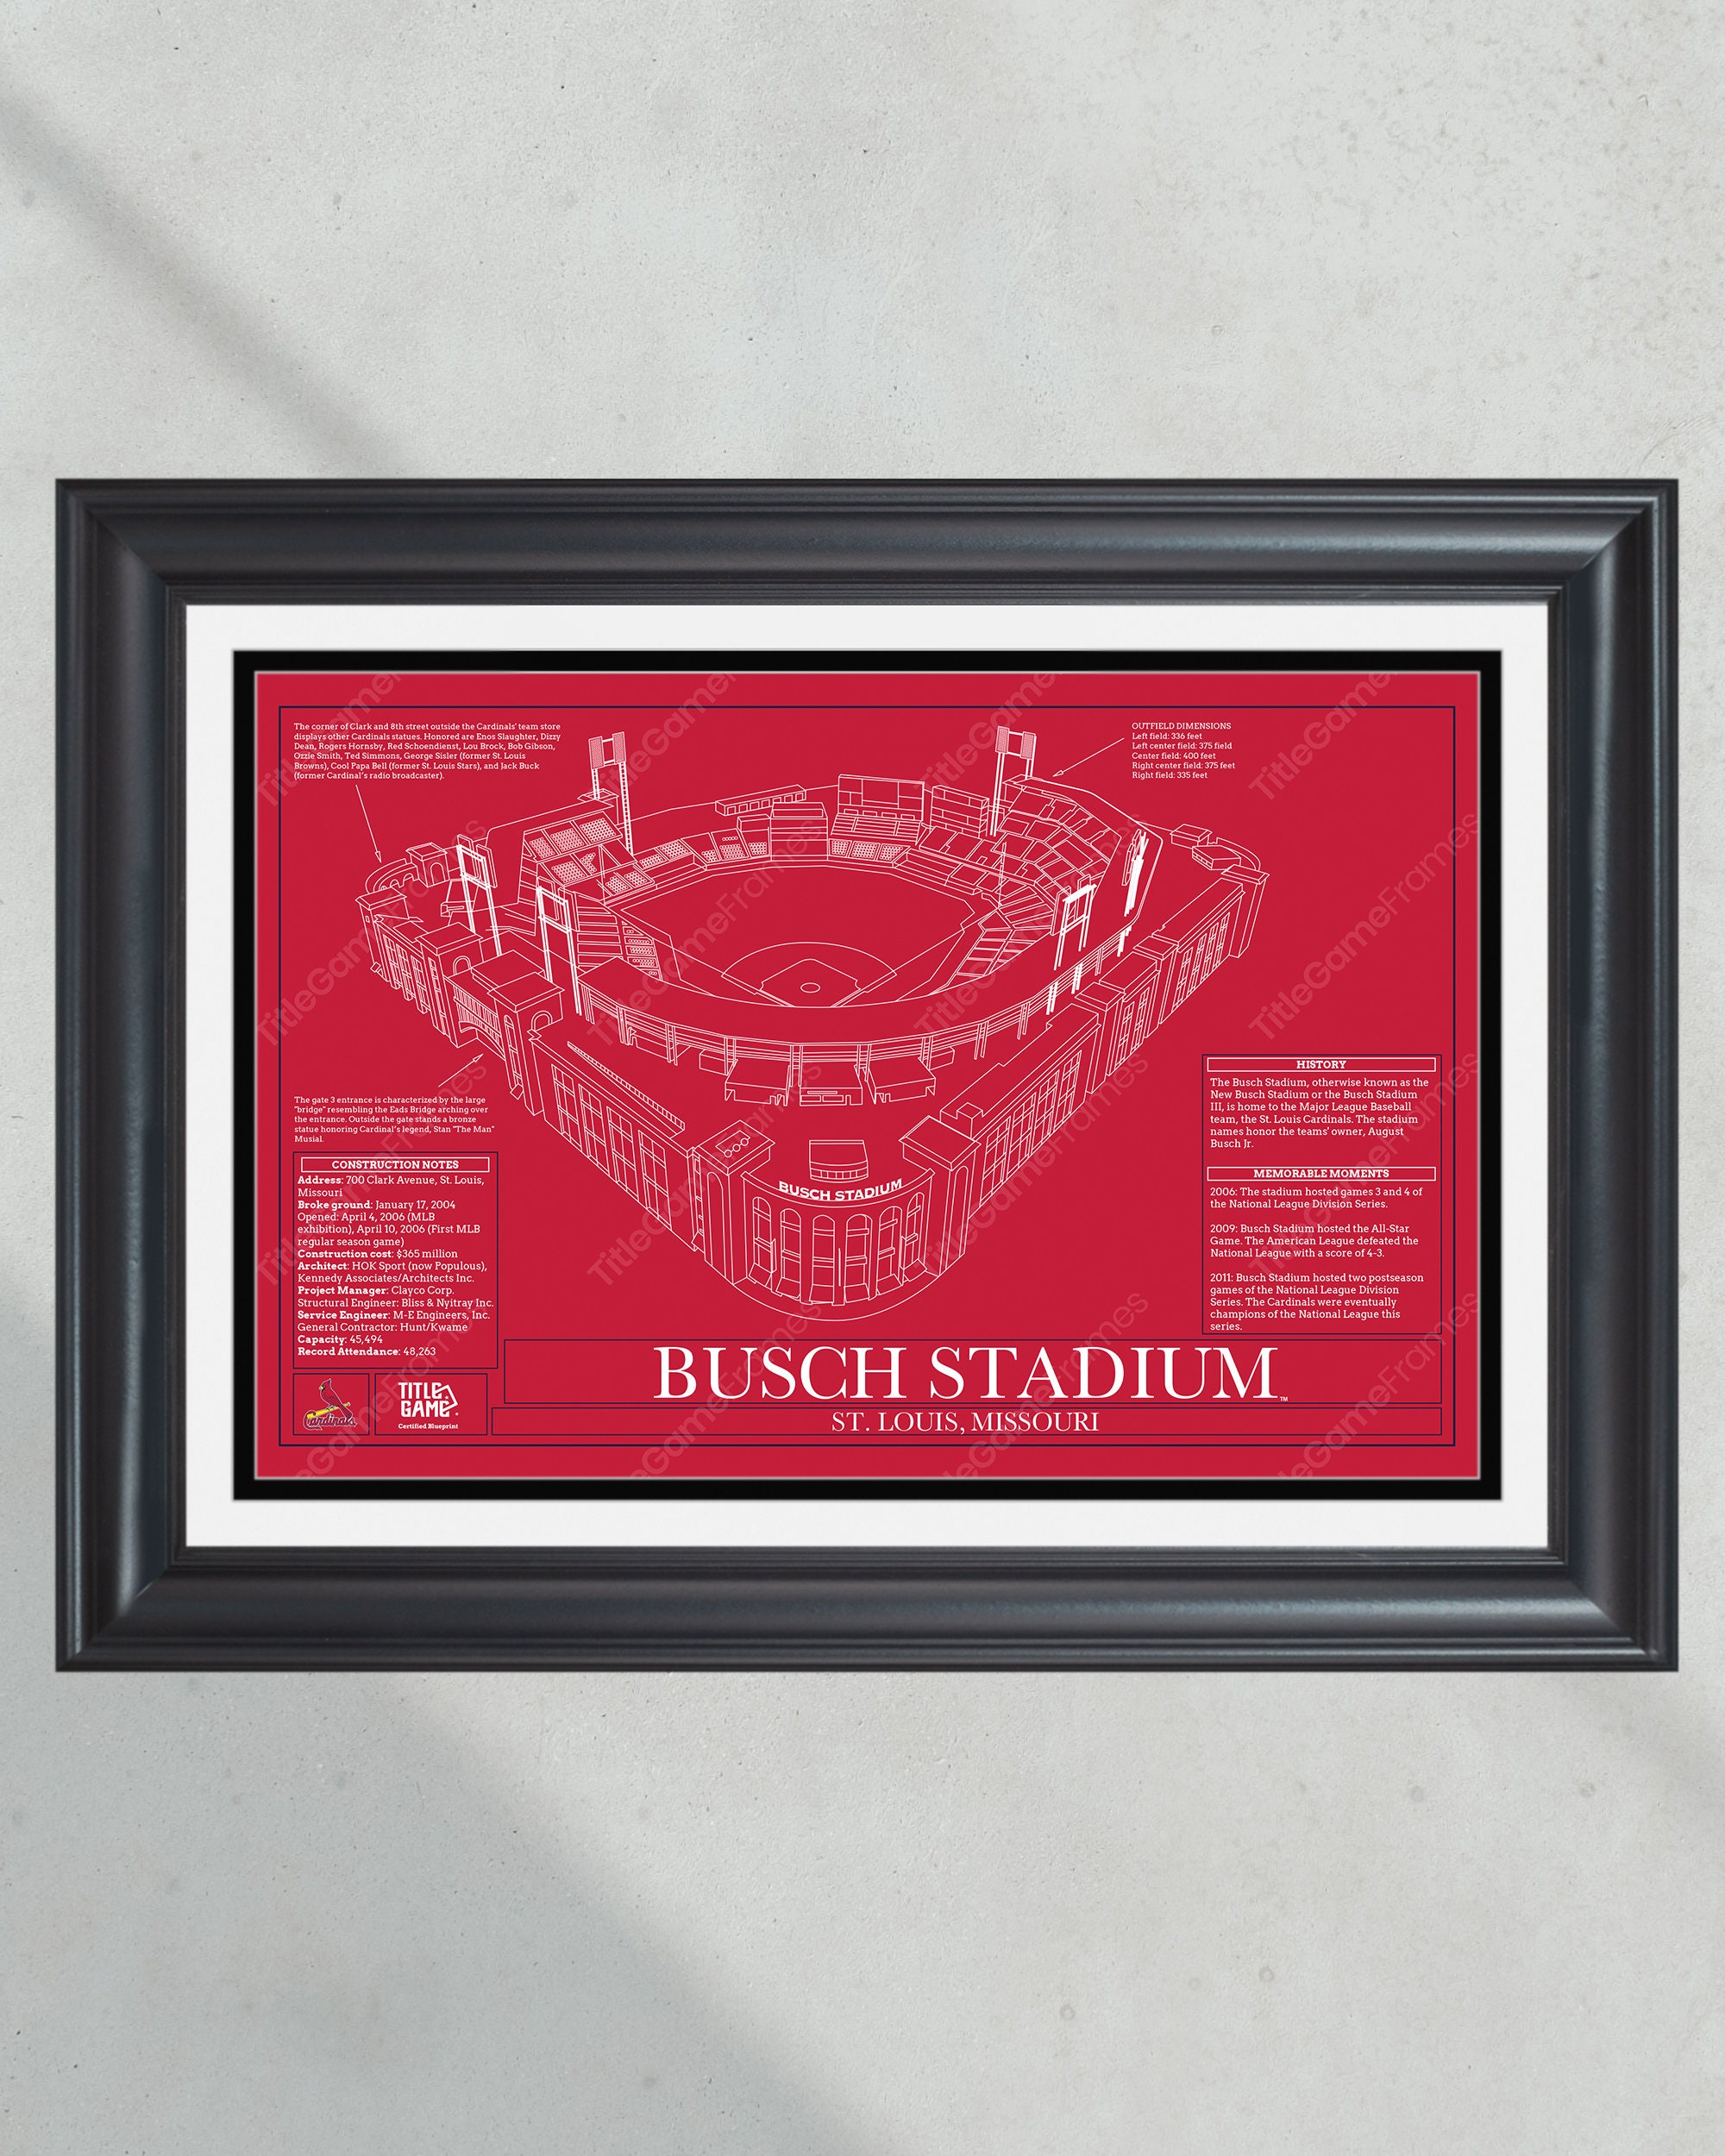 Cardinals home Busch Stadium back to 100% capacity Monday